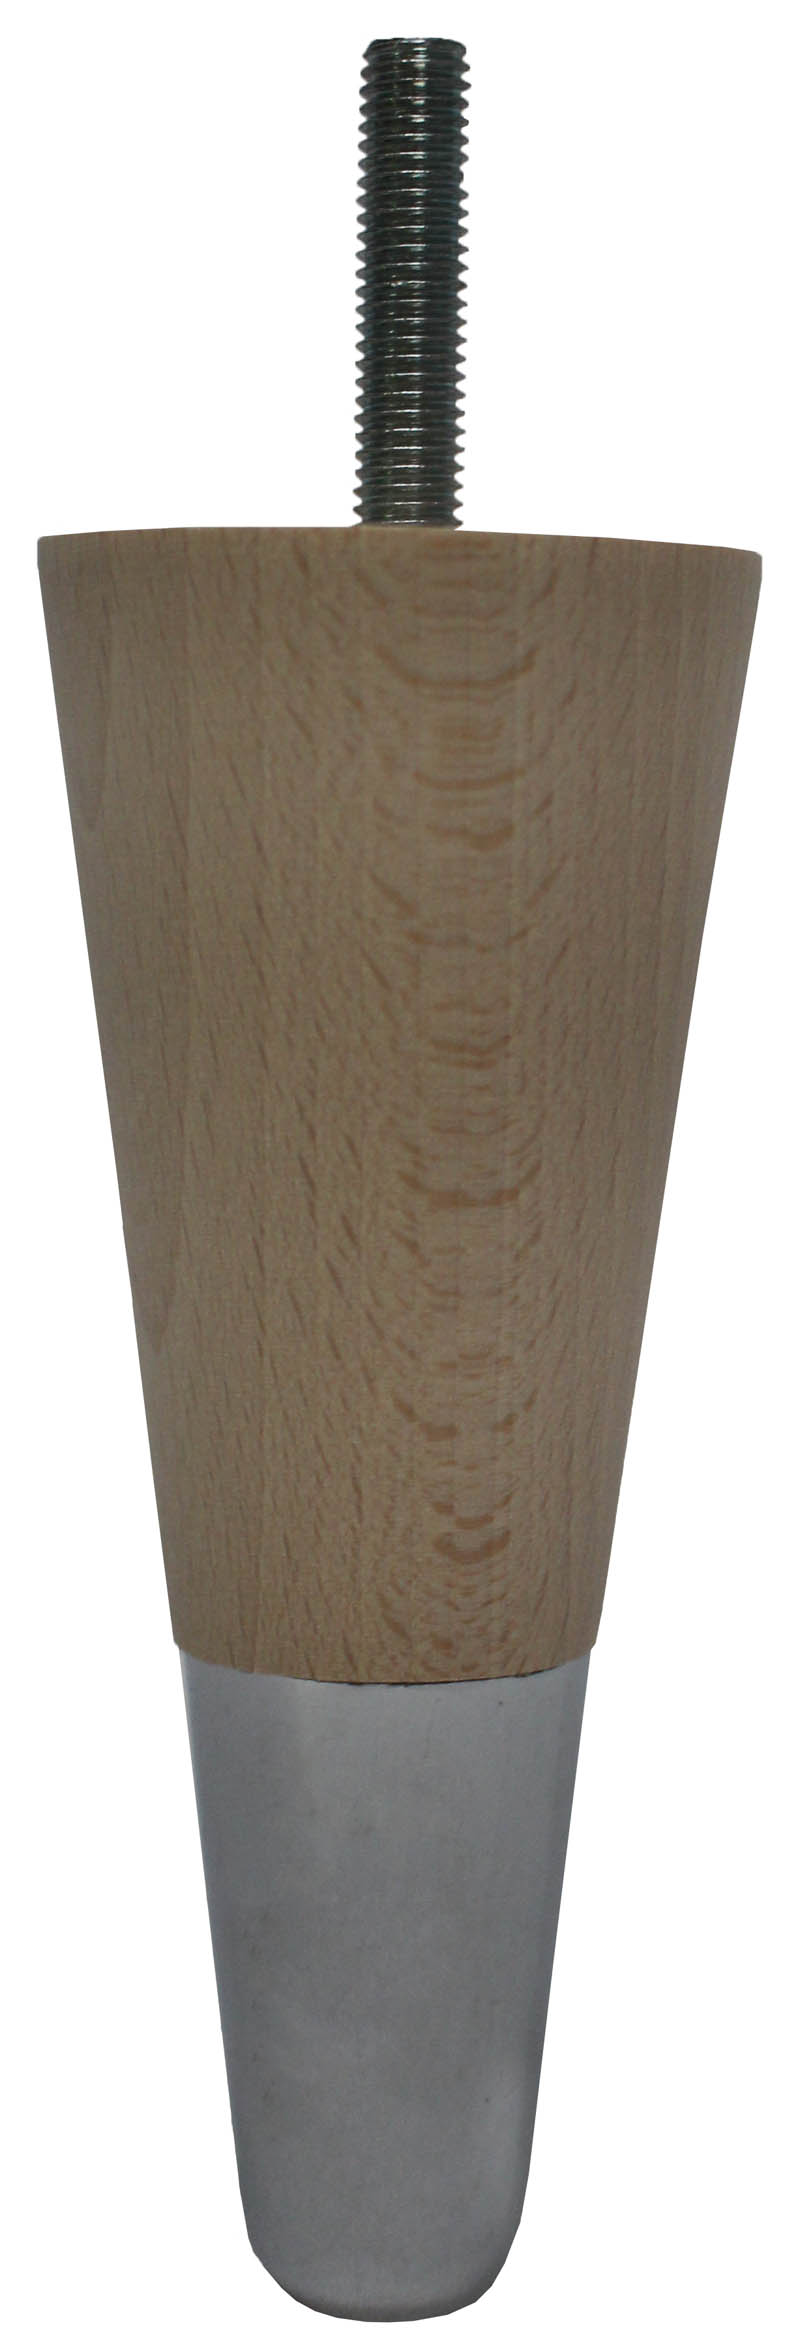 Azalea Tapered Furniture Legs - Raw Finish - Chrome Slipper Cups - Set of 4